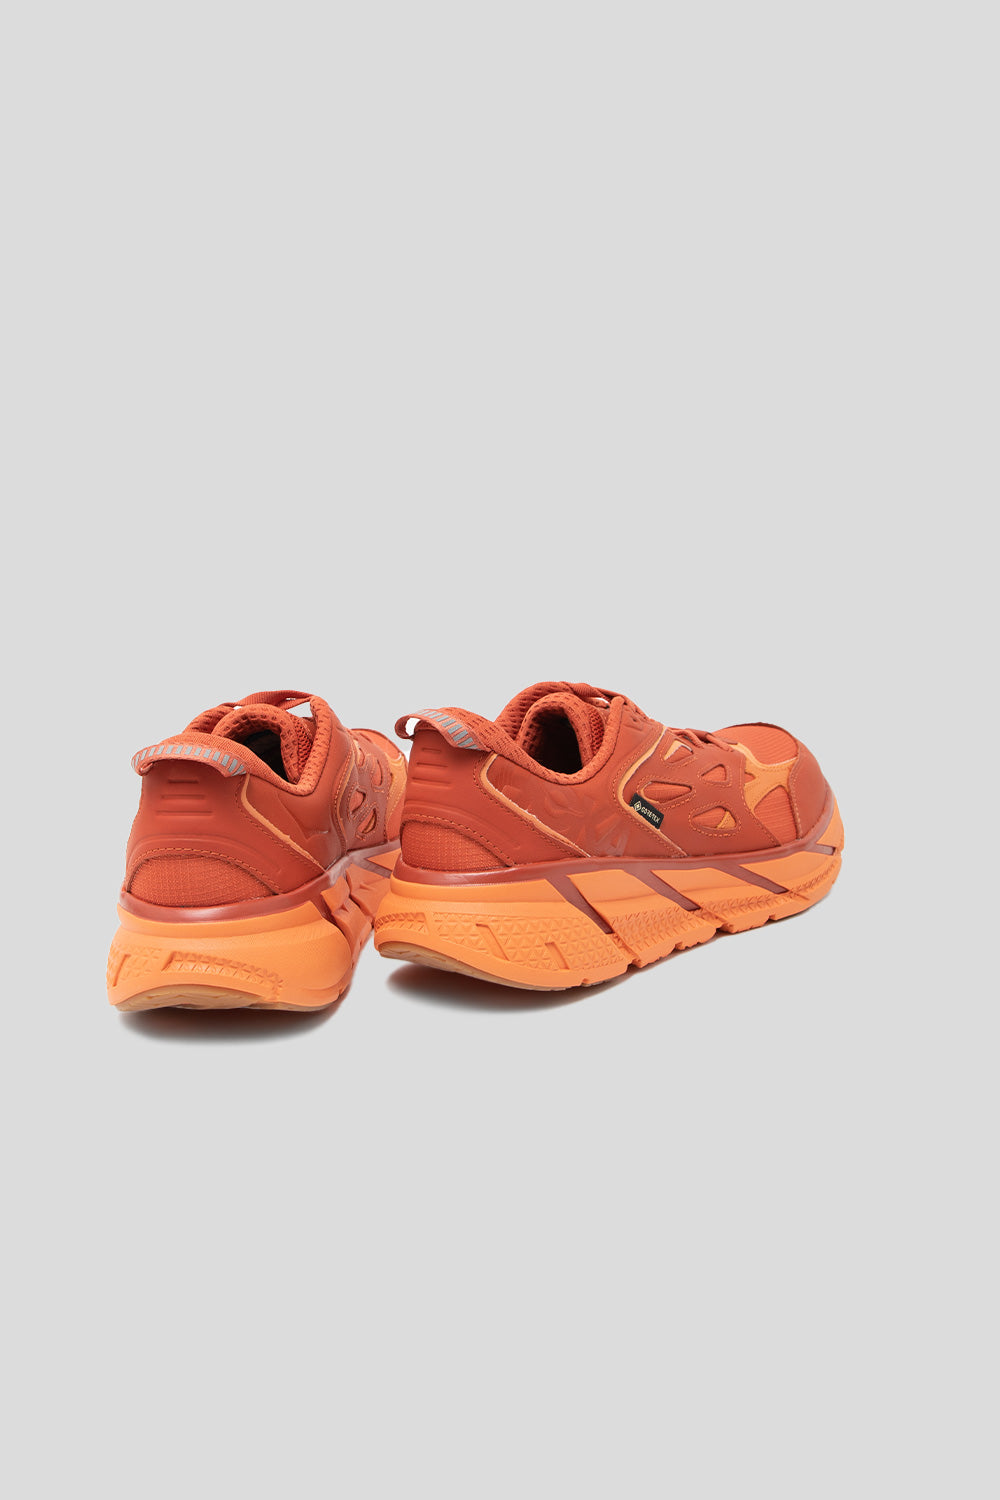 Hoka All Gender Clifton L GTX Shoe in Burnt Ochre/Copper Tan